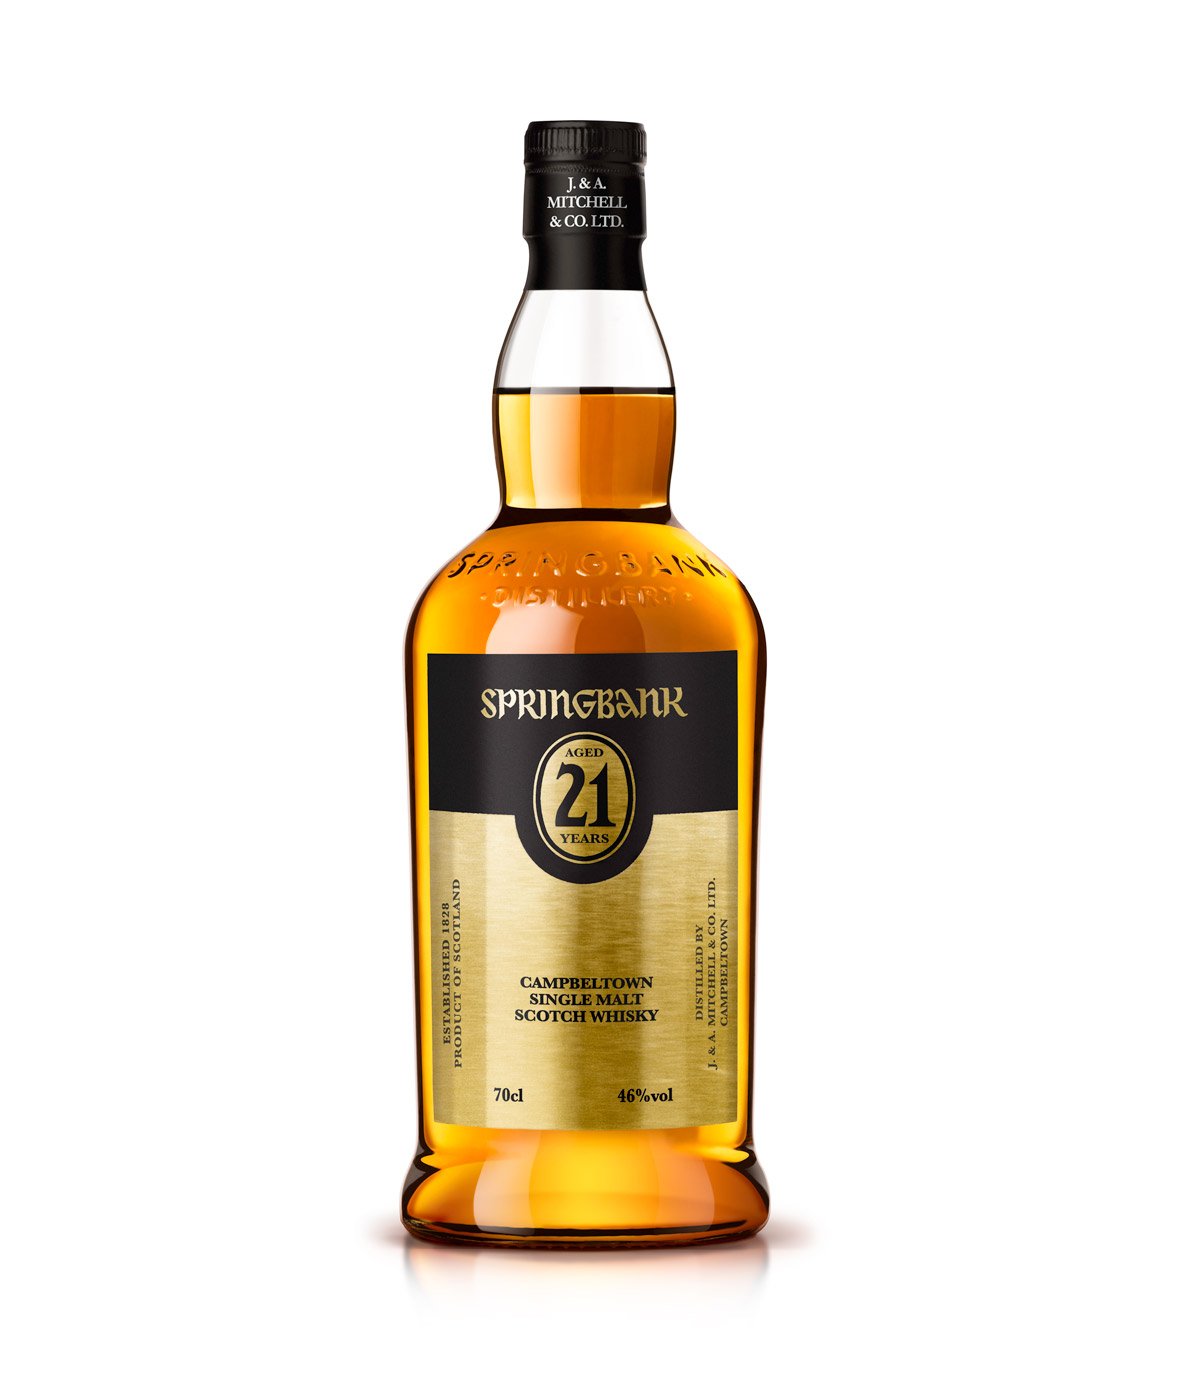 Buy Springbank 21 Year Old Scotch Whisky Online -Craft City